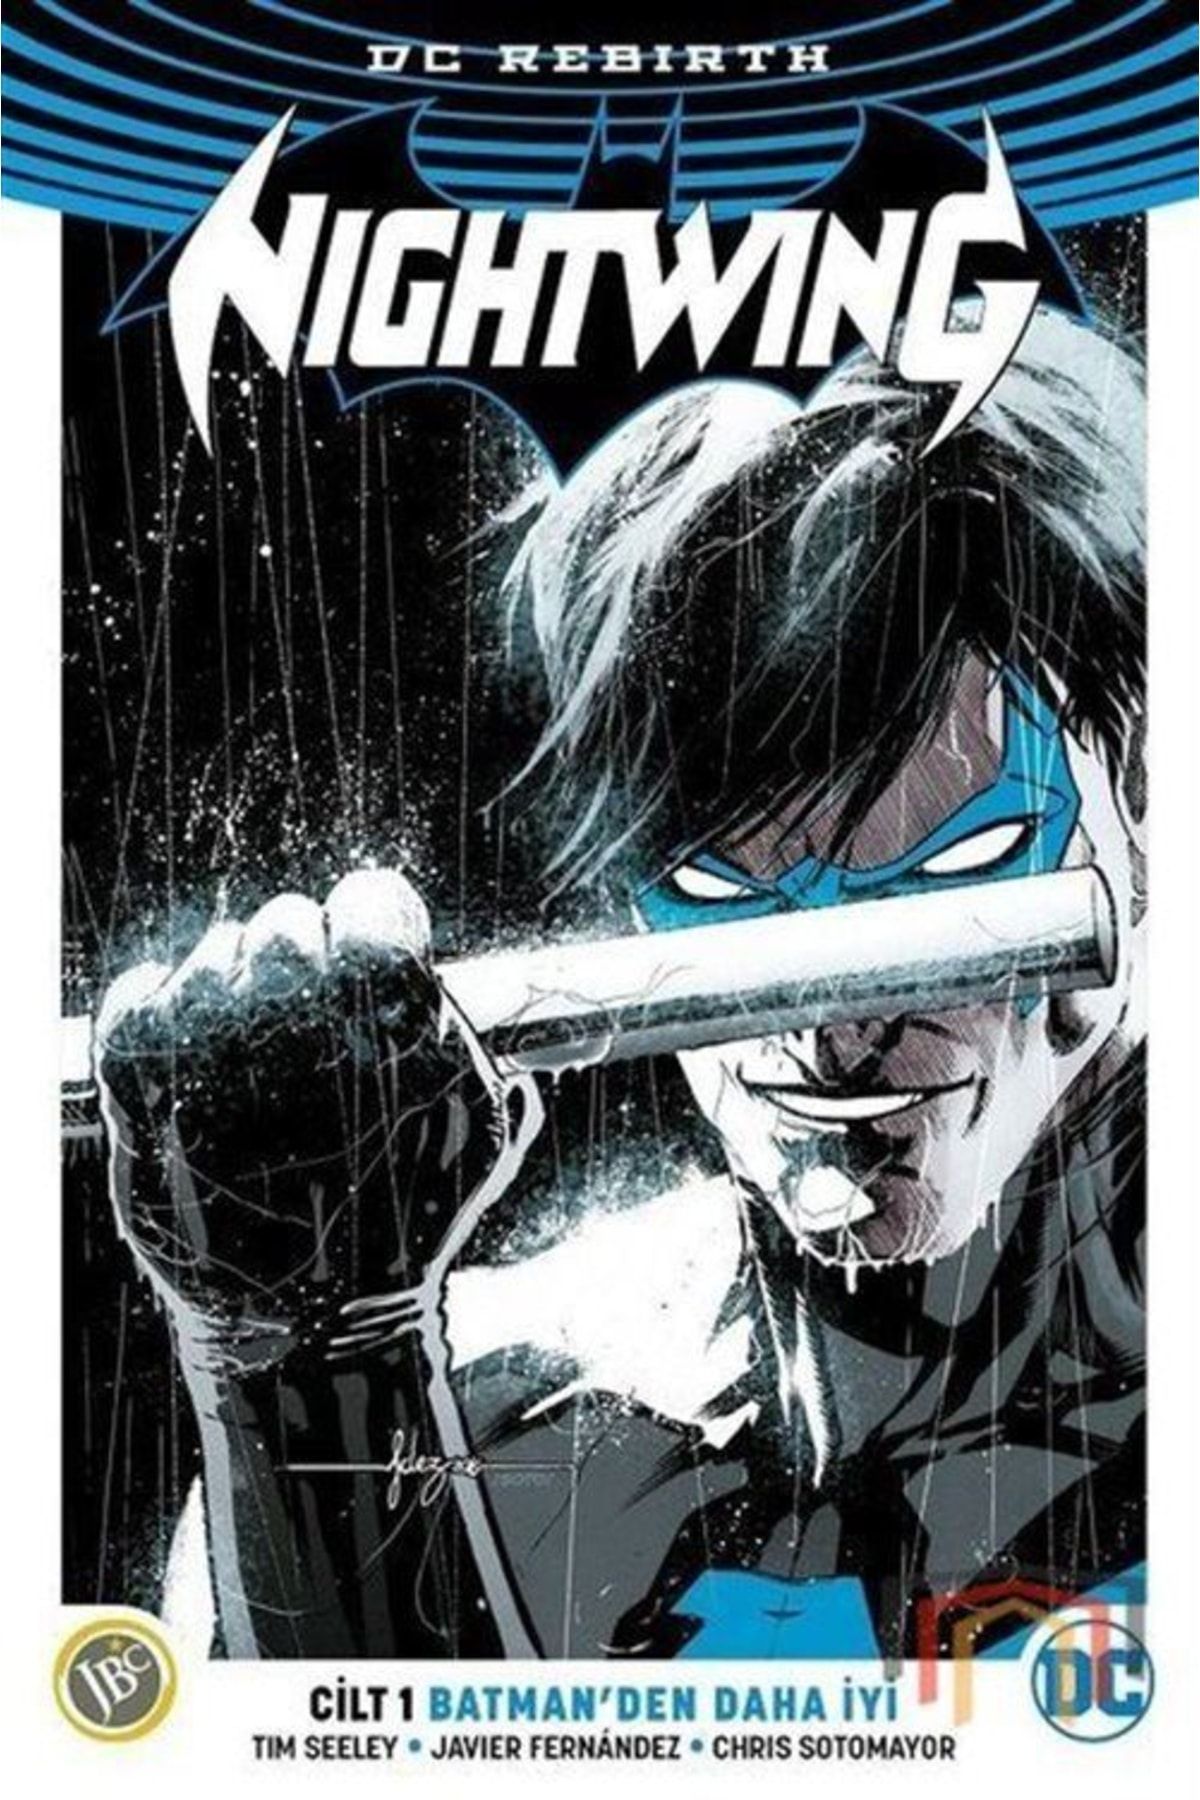 Jbc Yayıncılık Nightwing Cilt 1 Batman'den Daha Iyi  Tim Seeley